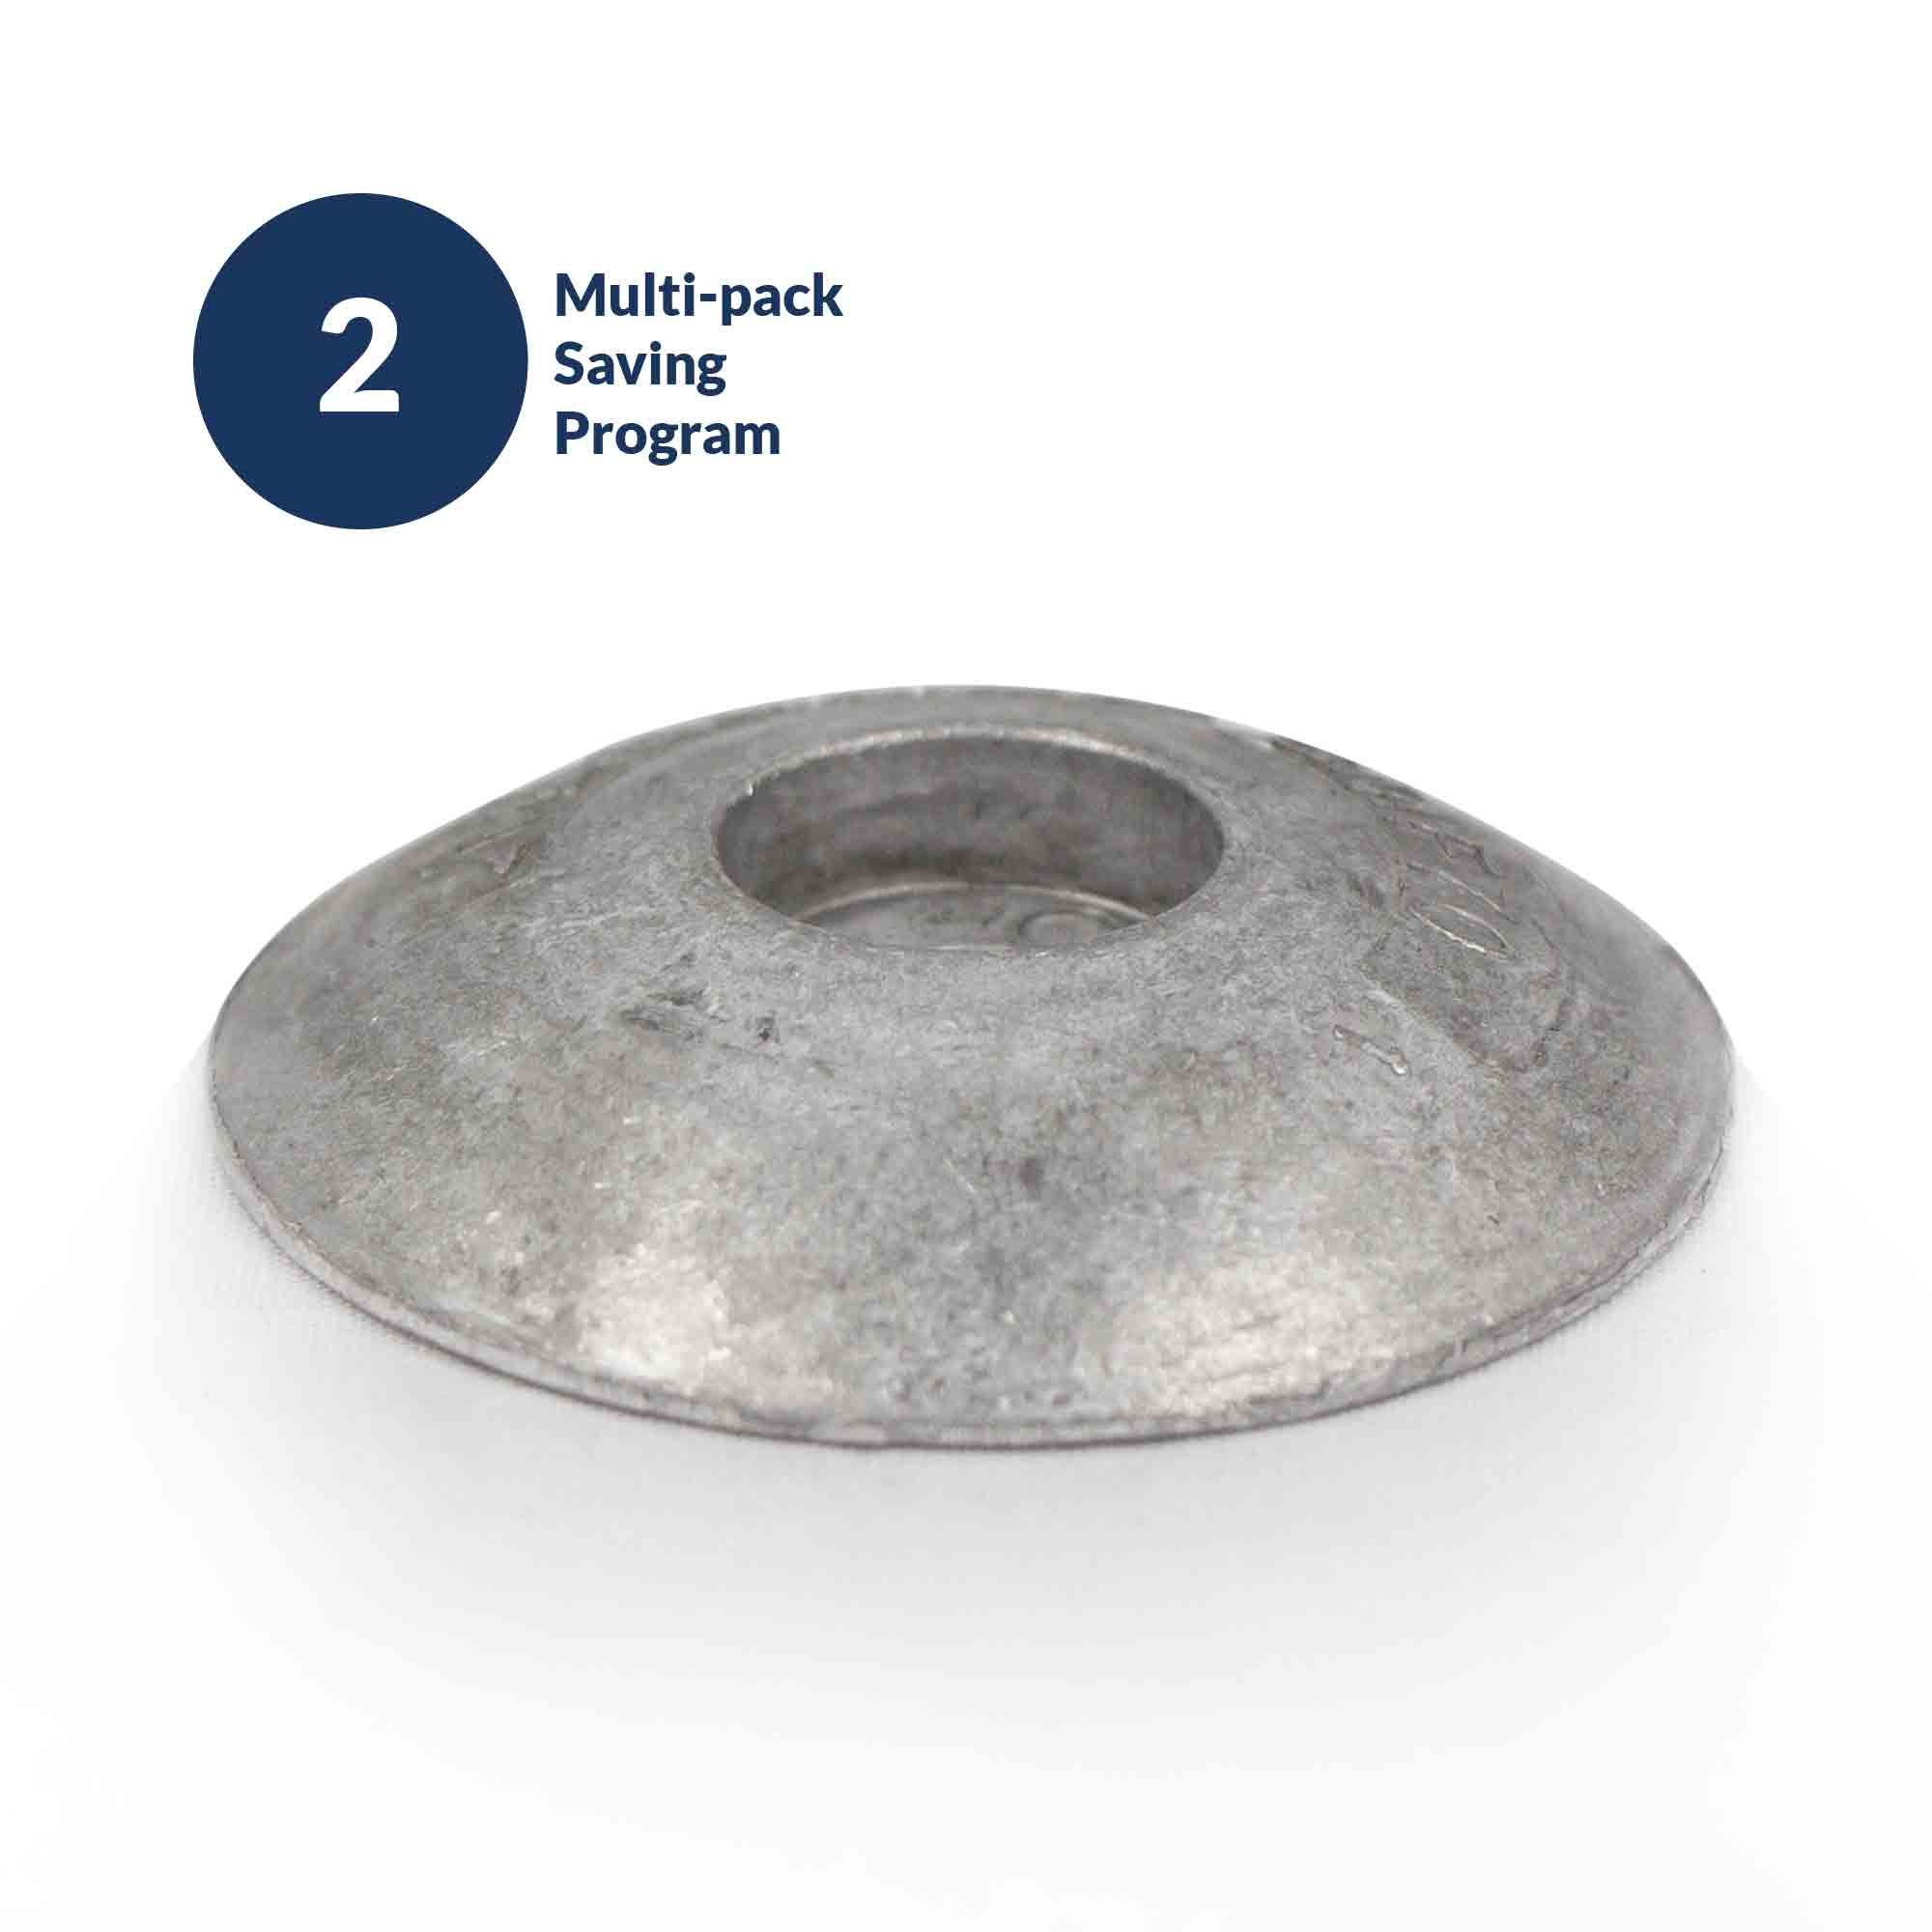 Alloy Rudder/Trim Tab Disc Anode, Aluminum, 3-1/2", 2-pack - FO4171-M2